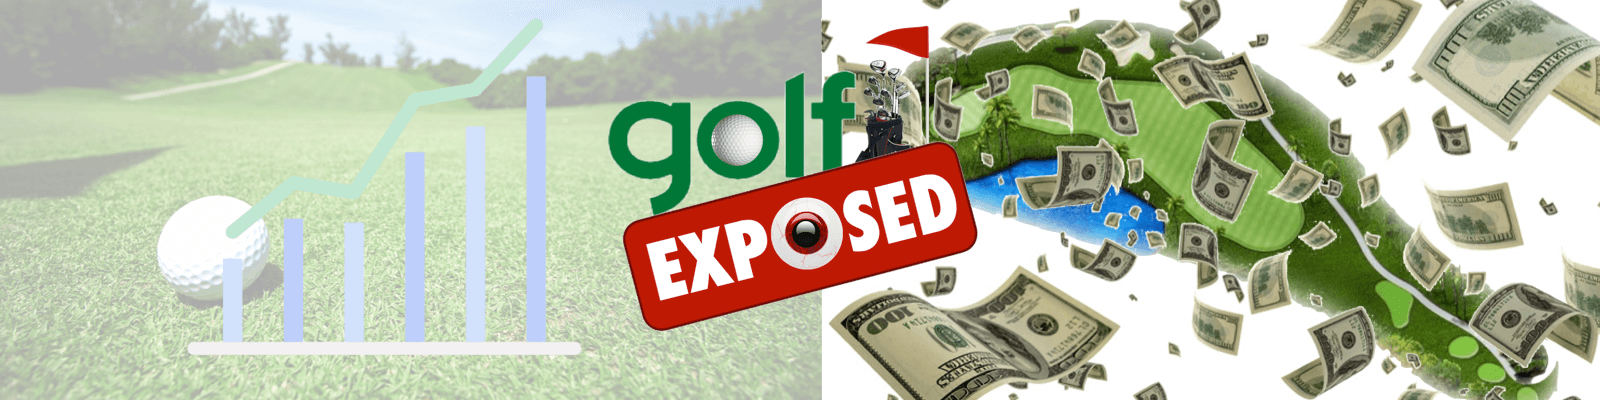 Golf Exposed